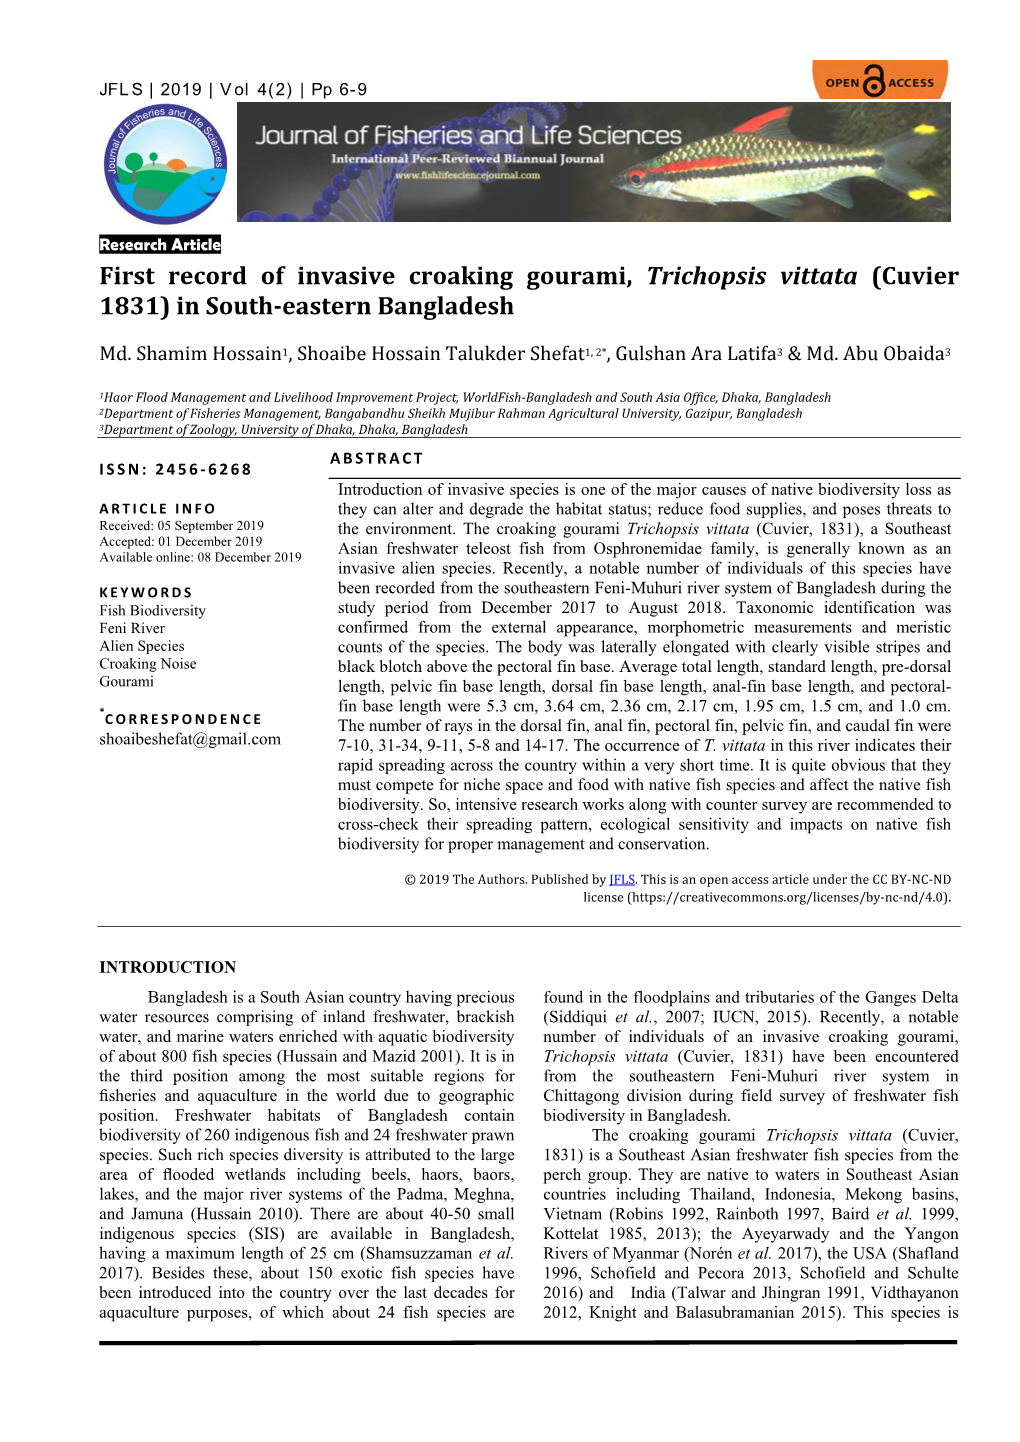 First Record of Invasive Croaking Gourami, Trichopsis Vittata (Cuvier 1831) in South-Eastern Bangladesh